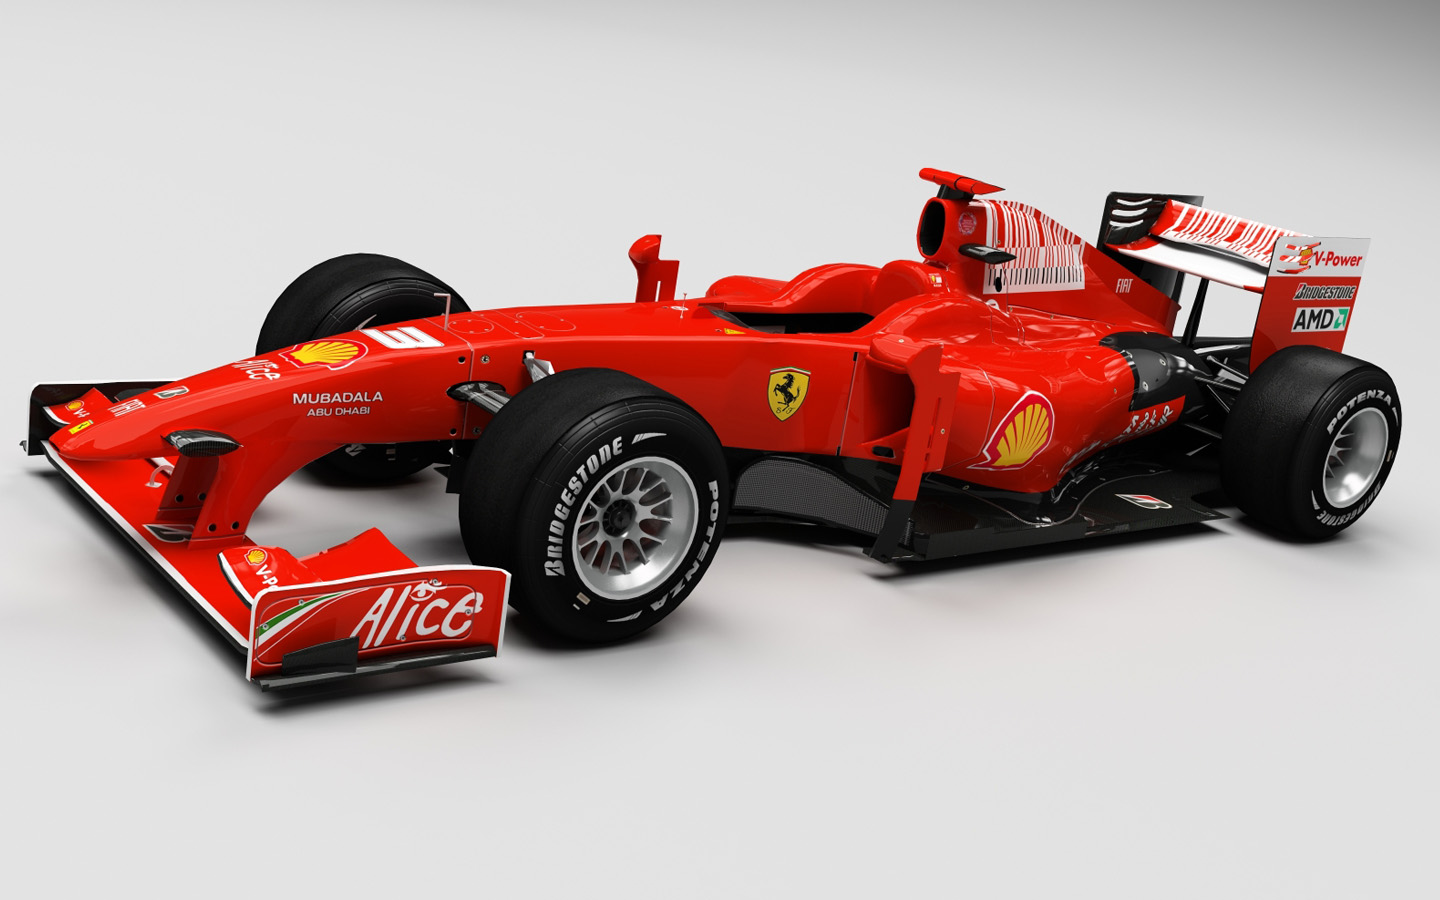 Ferrari Car HD Wallpaper for iPhone